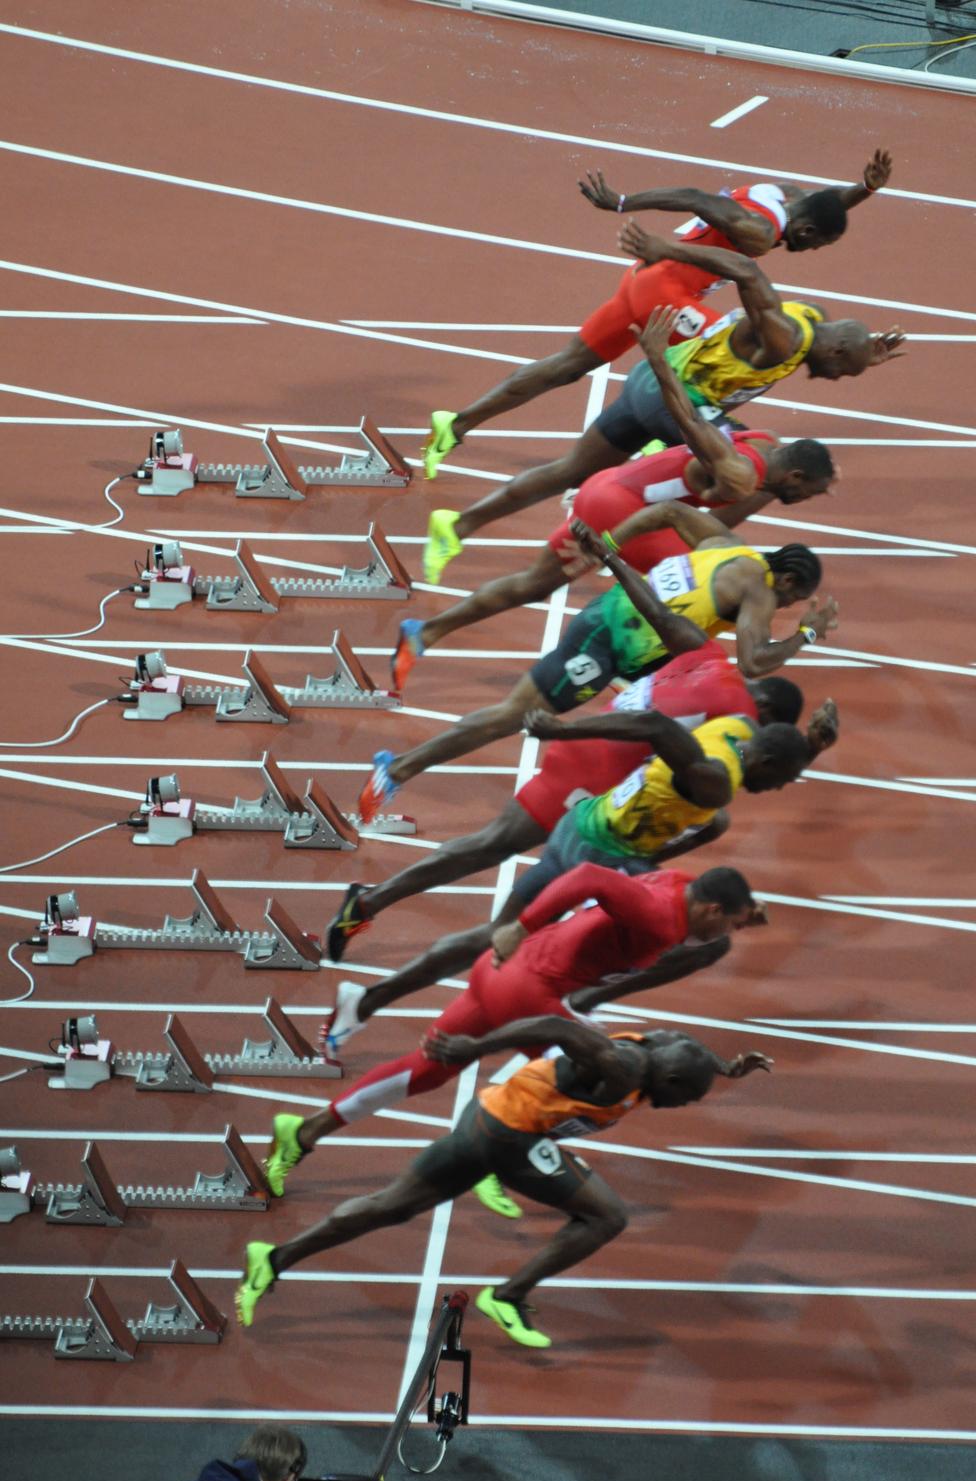 http://www.net4info.de/photos/cpg/albums/userpics/10001/World_Championships_in_Athletics_100_metres_final.jpg